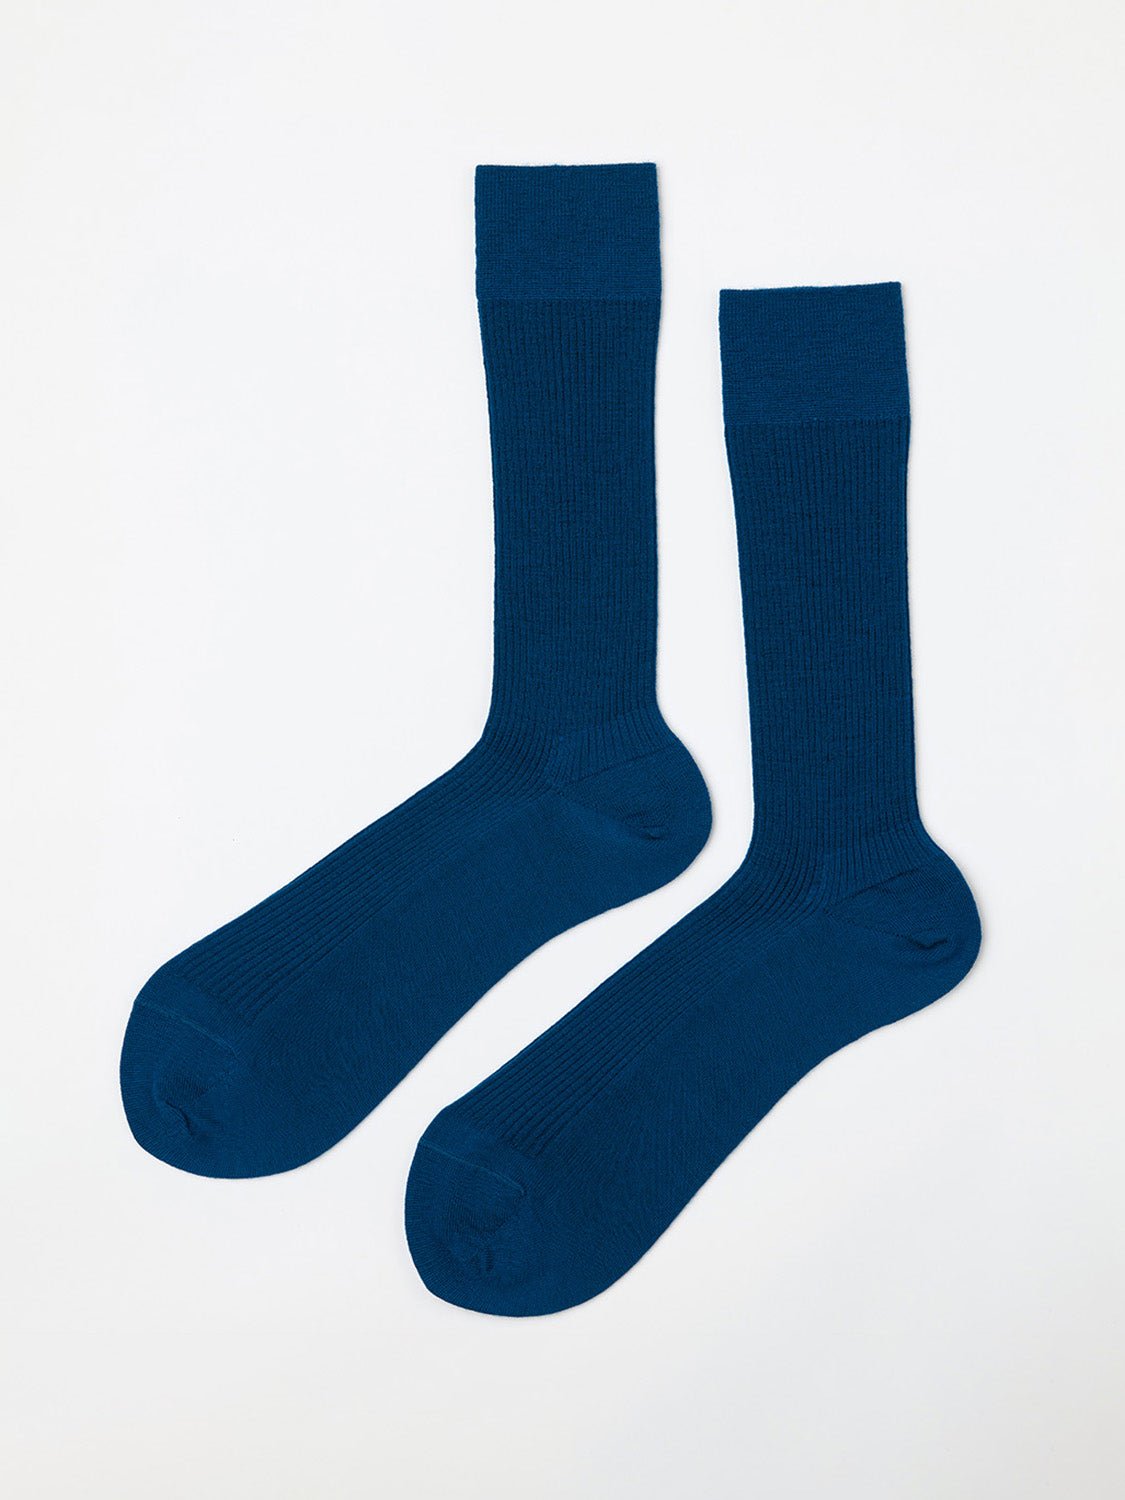 Classy Socks Merino Wool Blue